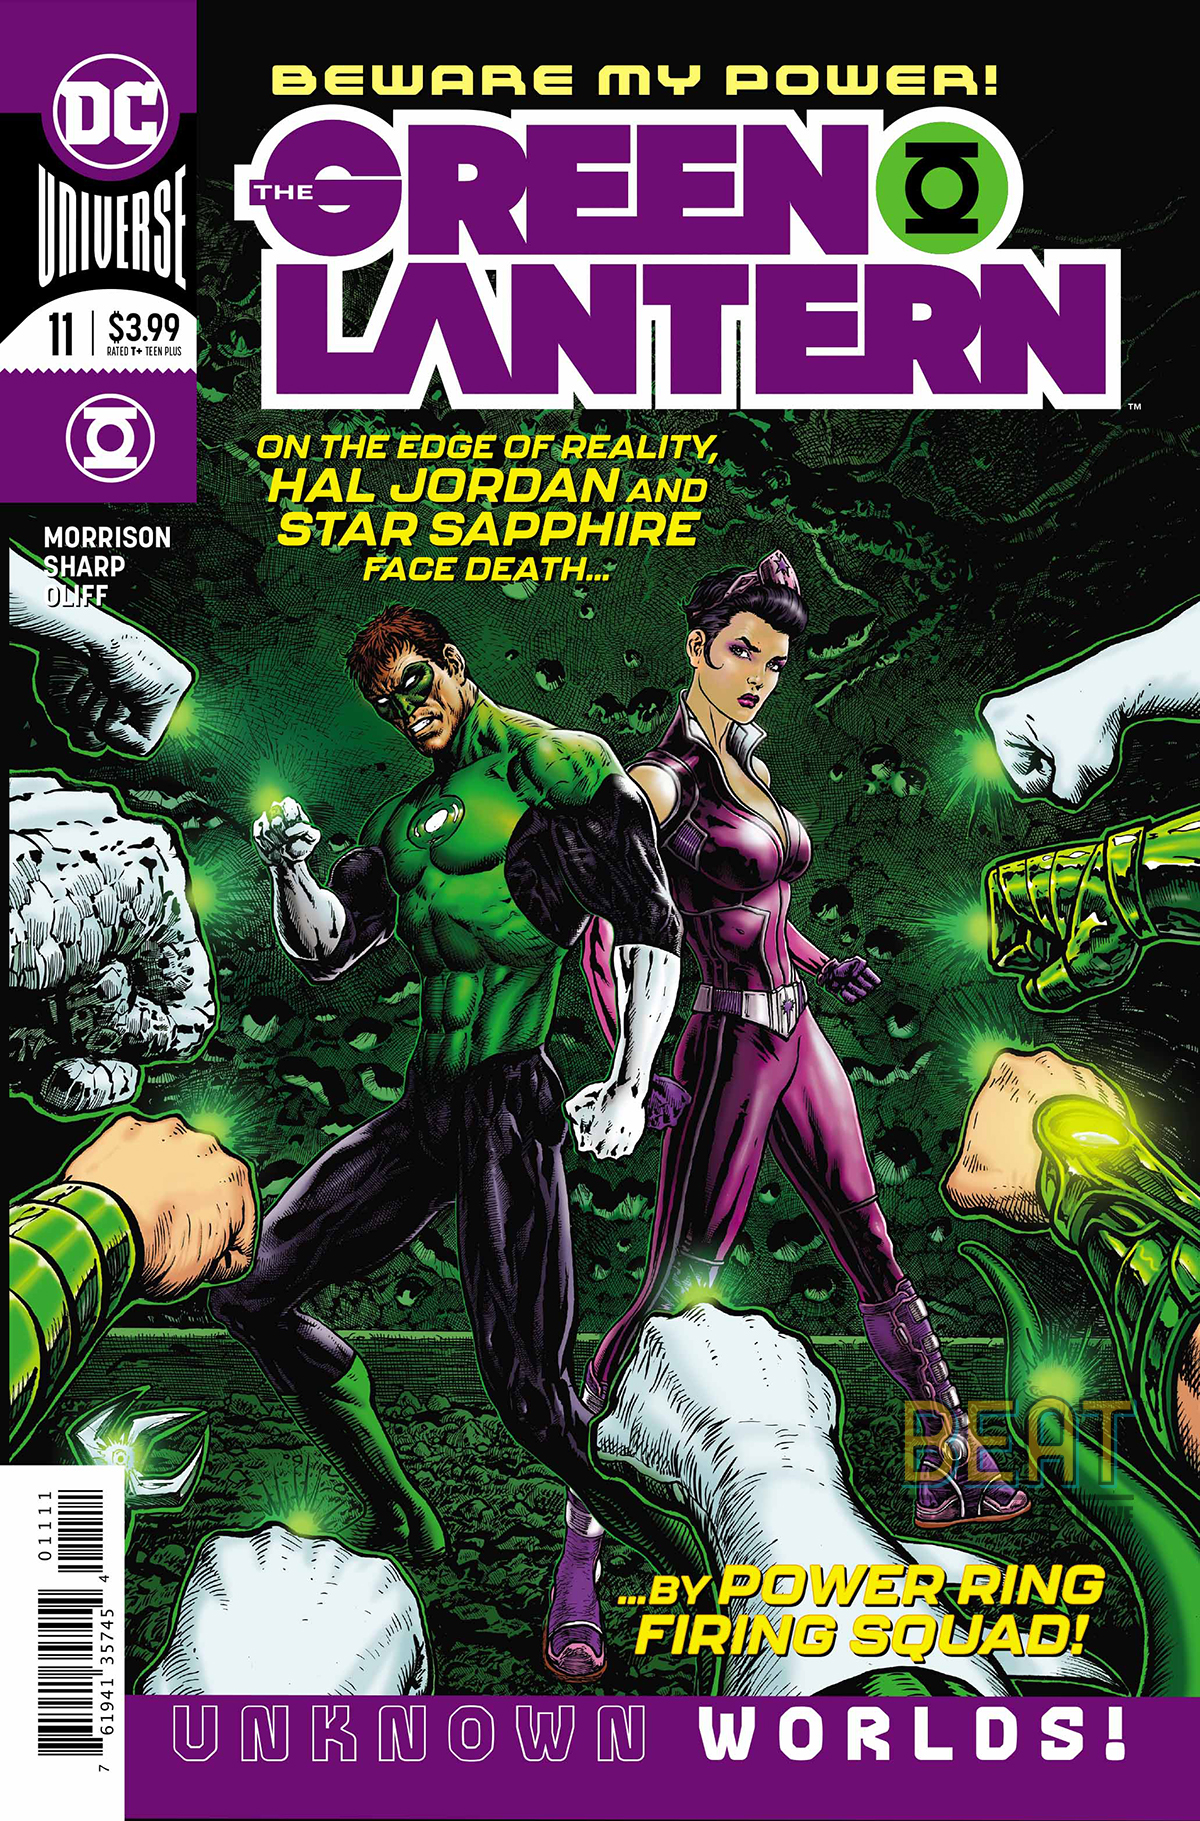 The Green Lantern #11 preview